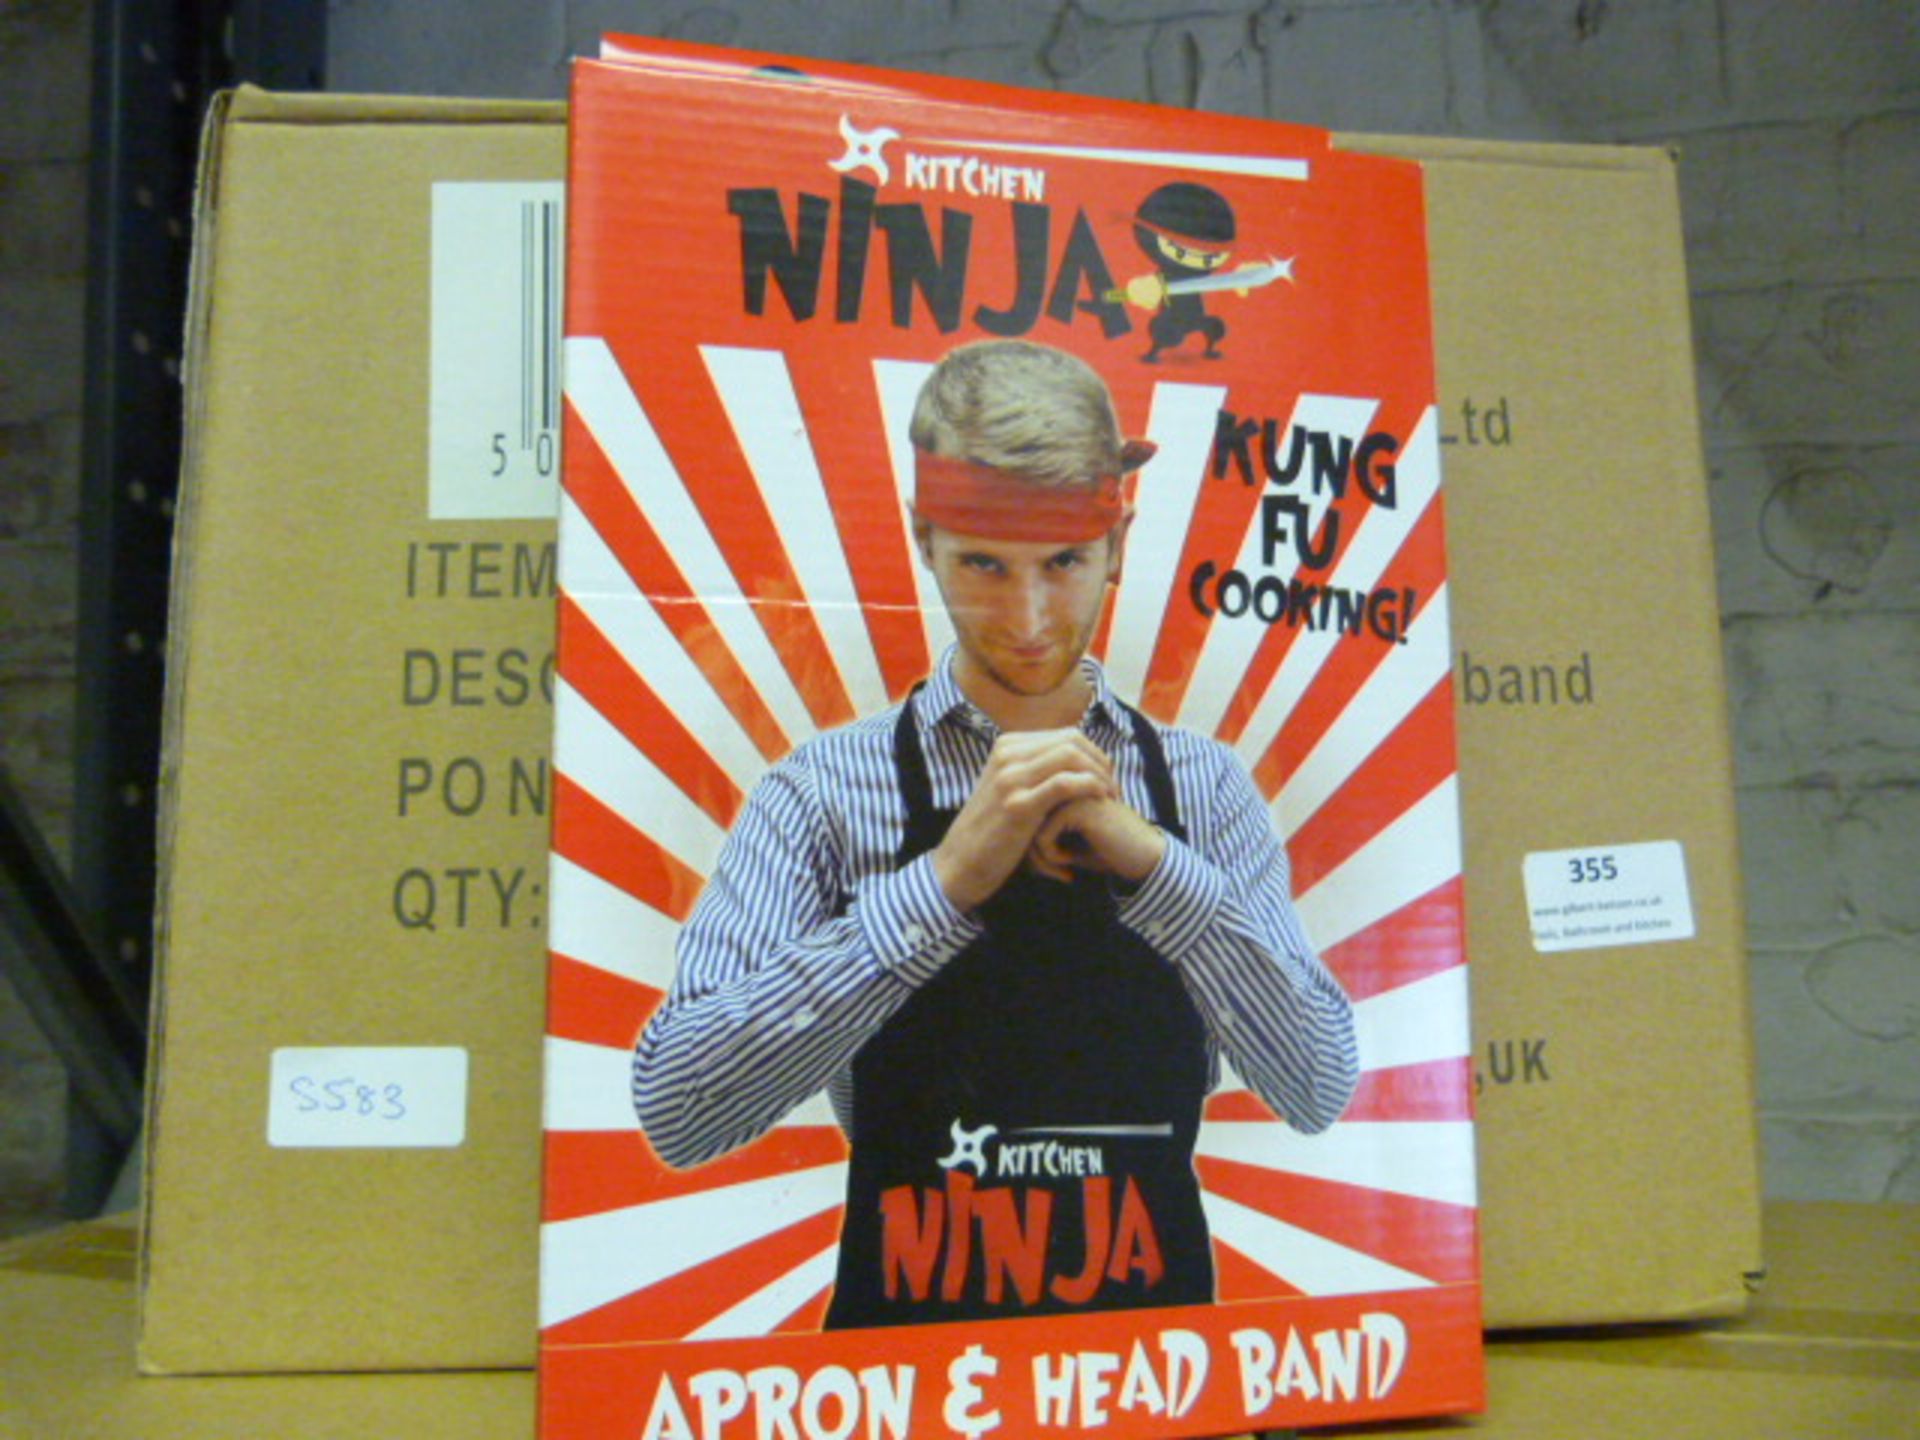 *Ninja Apron and Headband